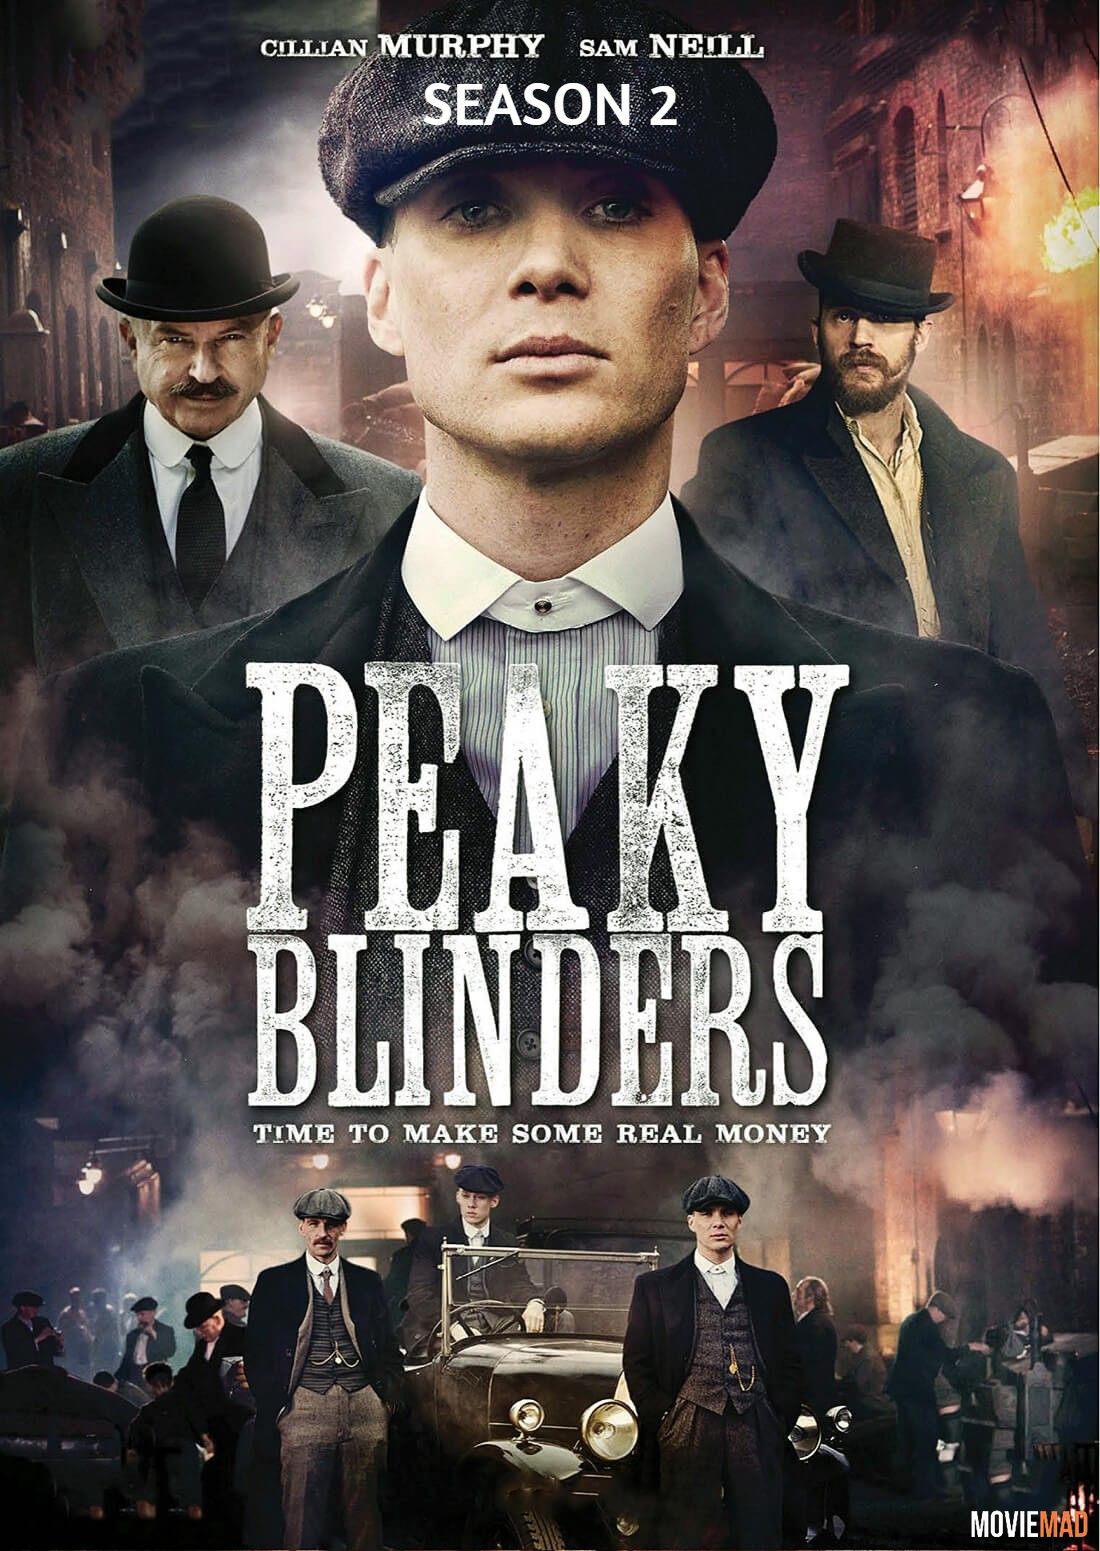 Peaky Blinders S02 (2014) English Netflix WEB Series HDRip 720p 480p